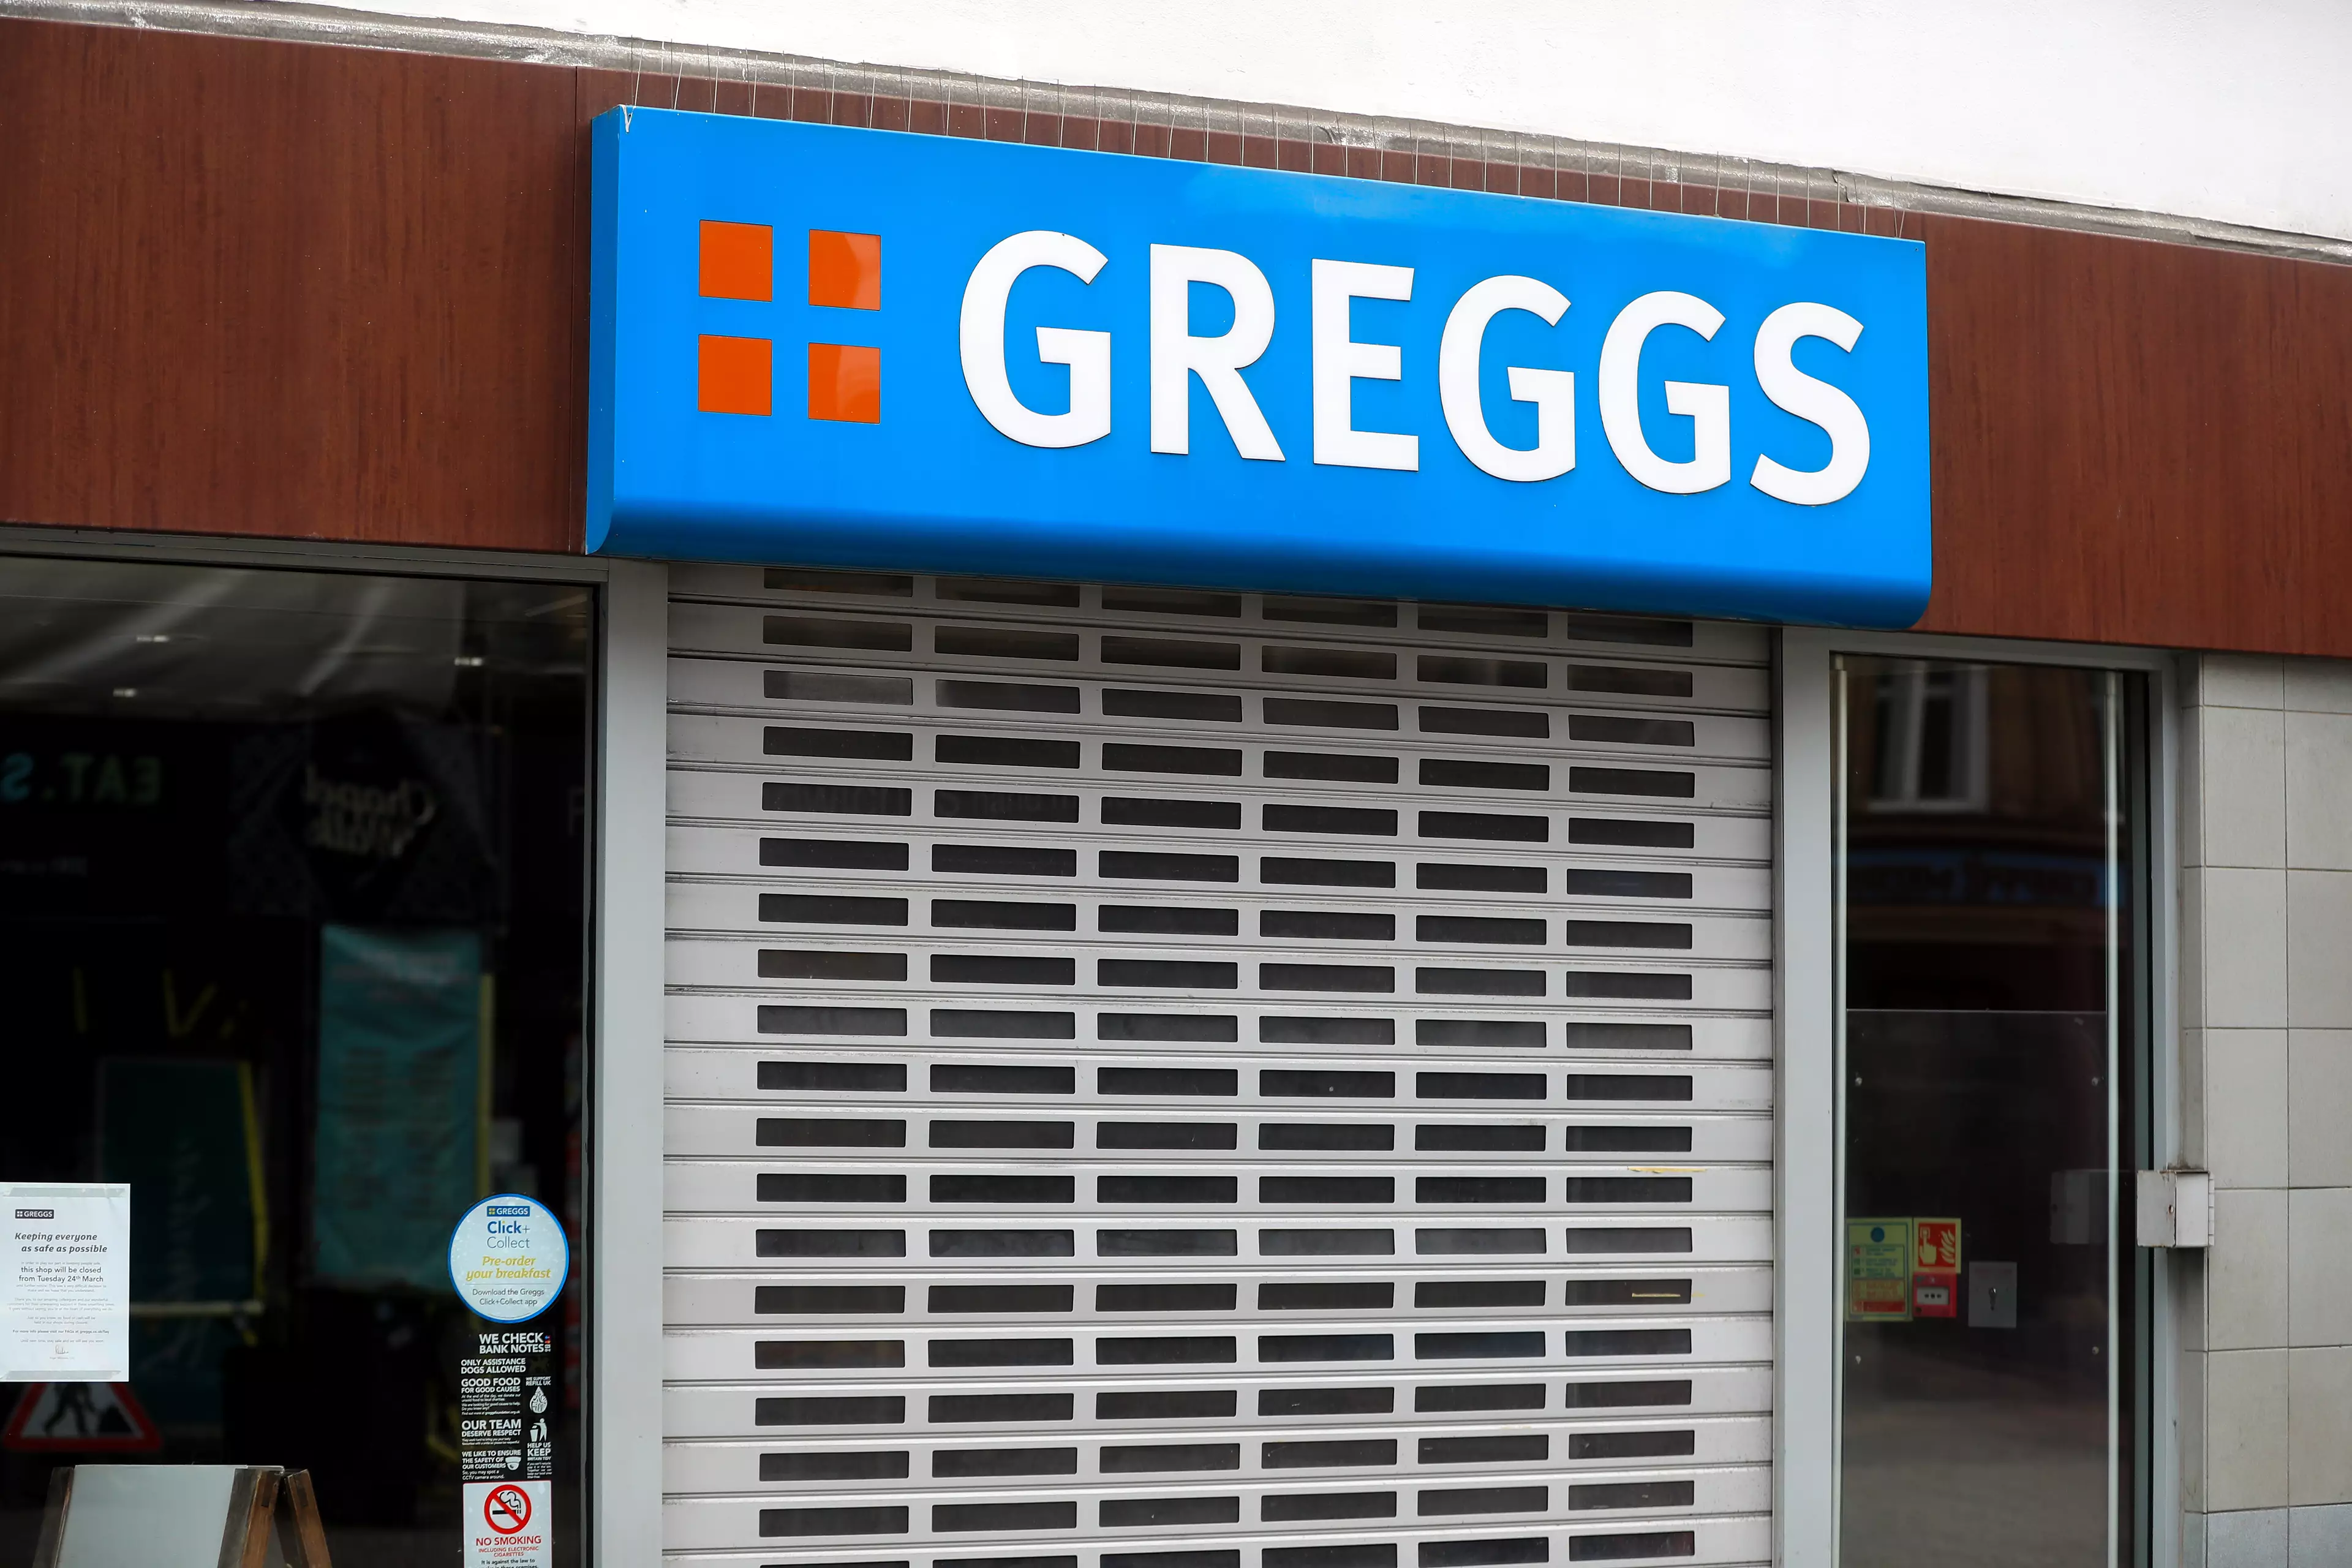 Greggs has closed due to the coronavirus outbreak.